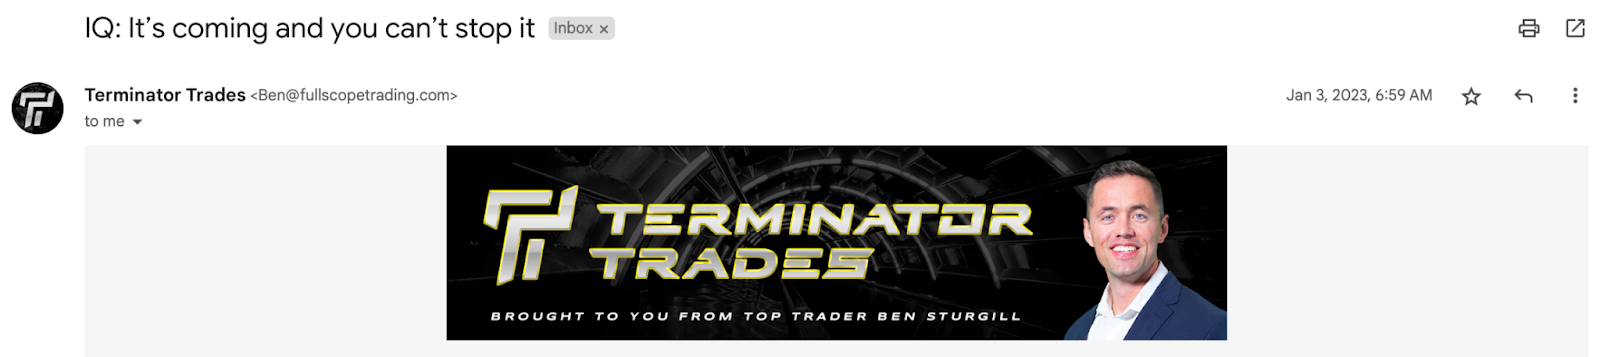 Terminator trades